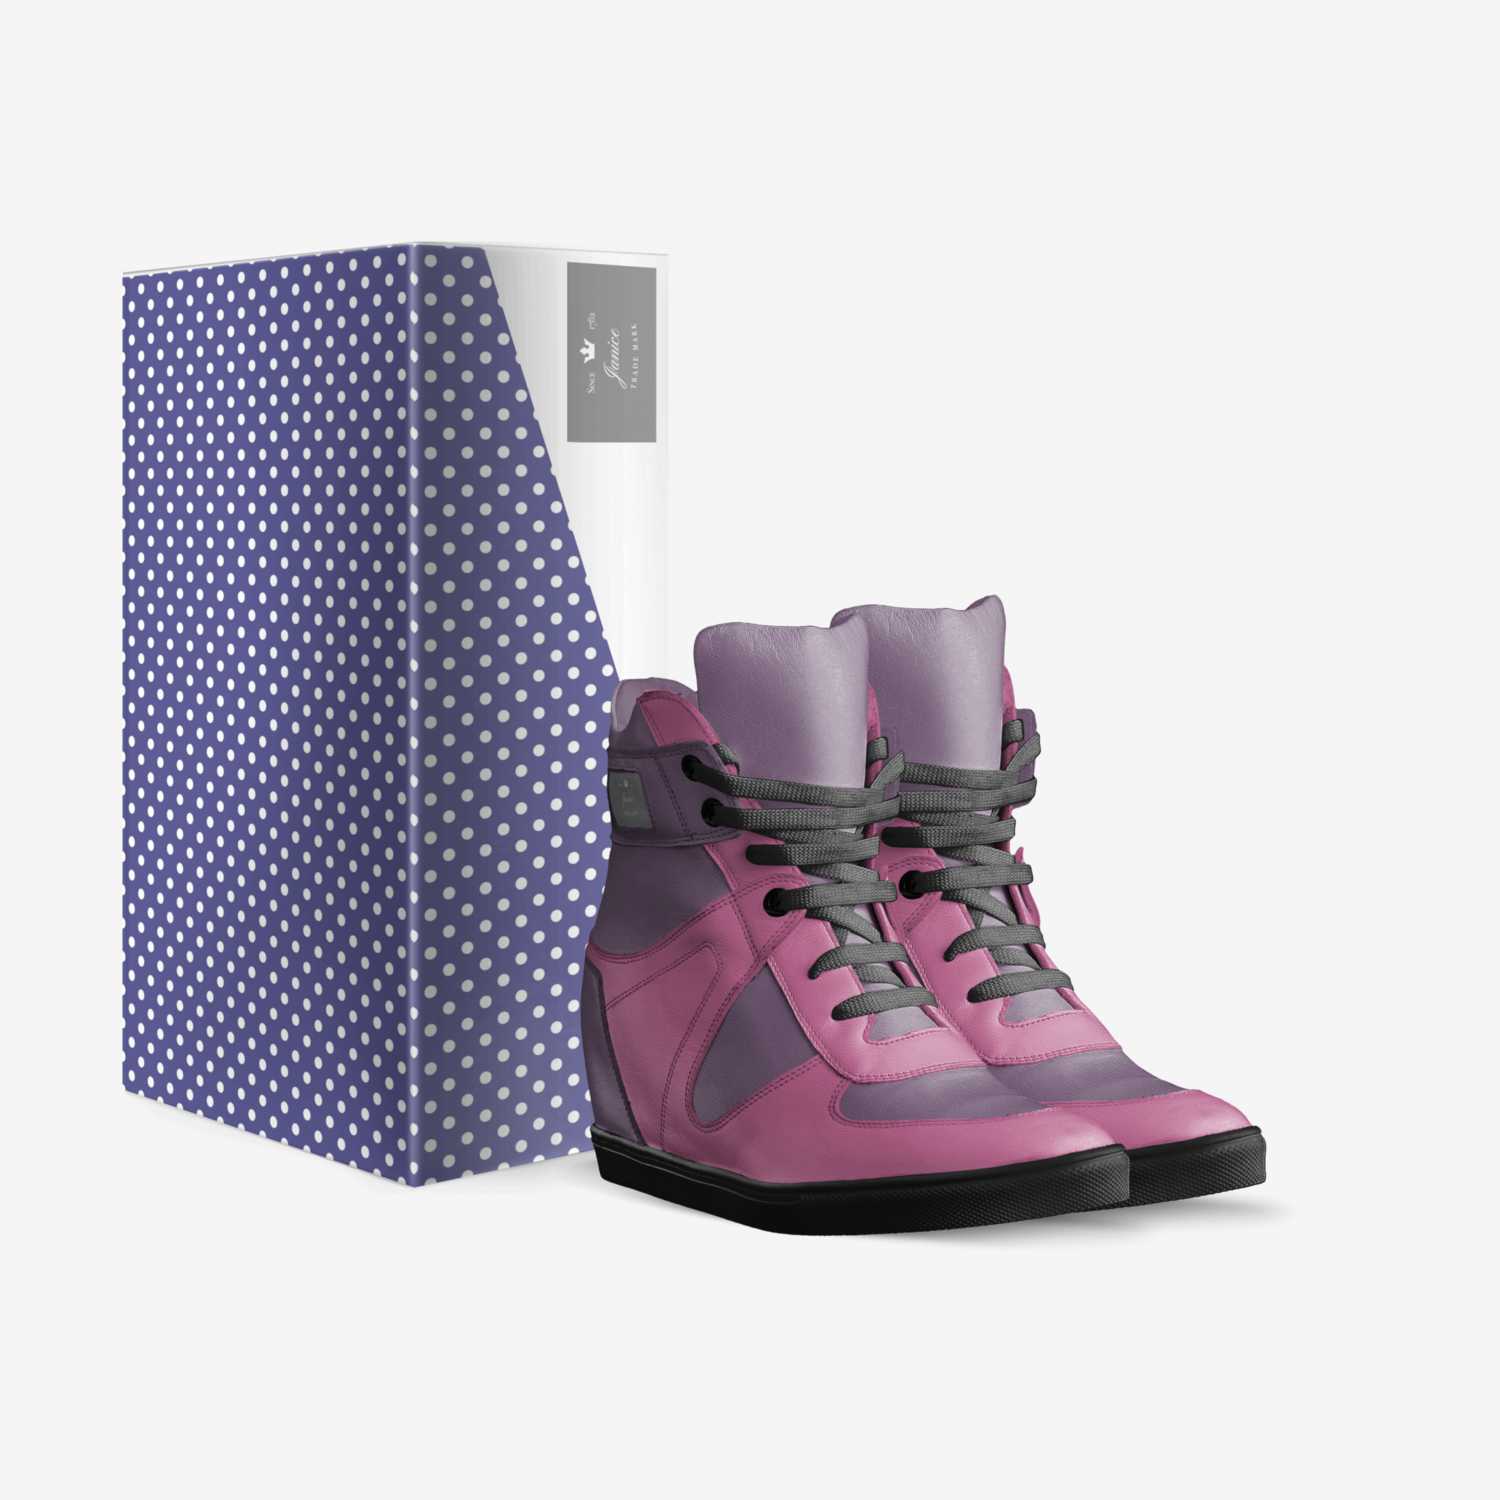 Janice custom made in Italy shoes by Moffatt Gordon | Box view